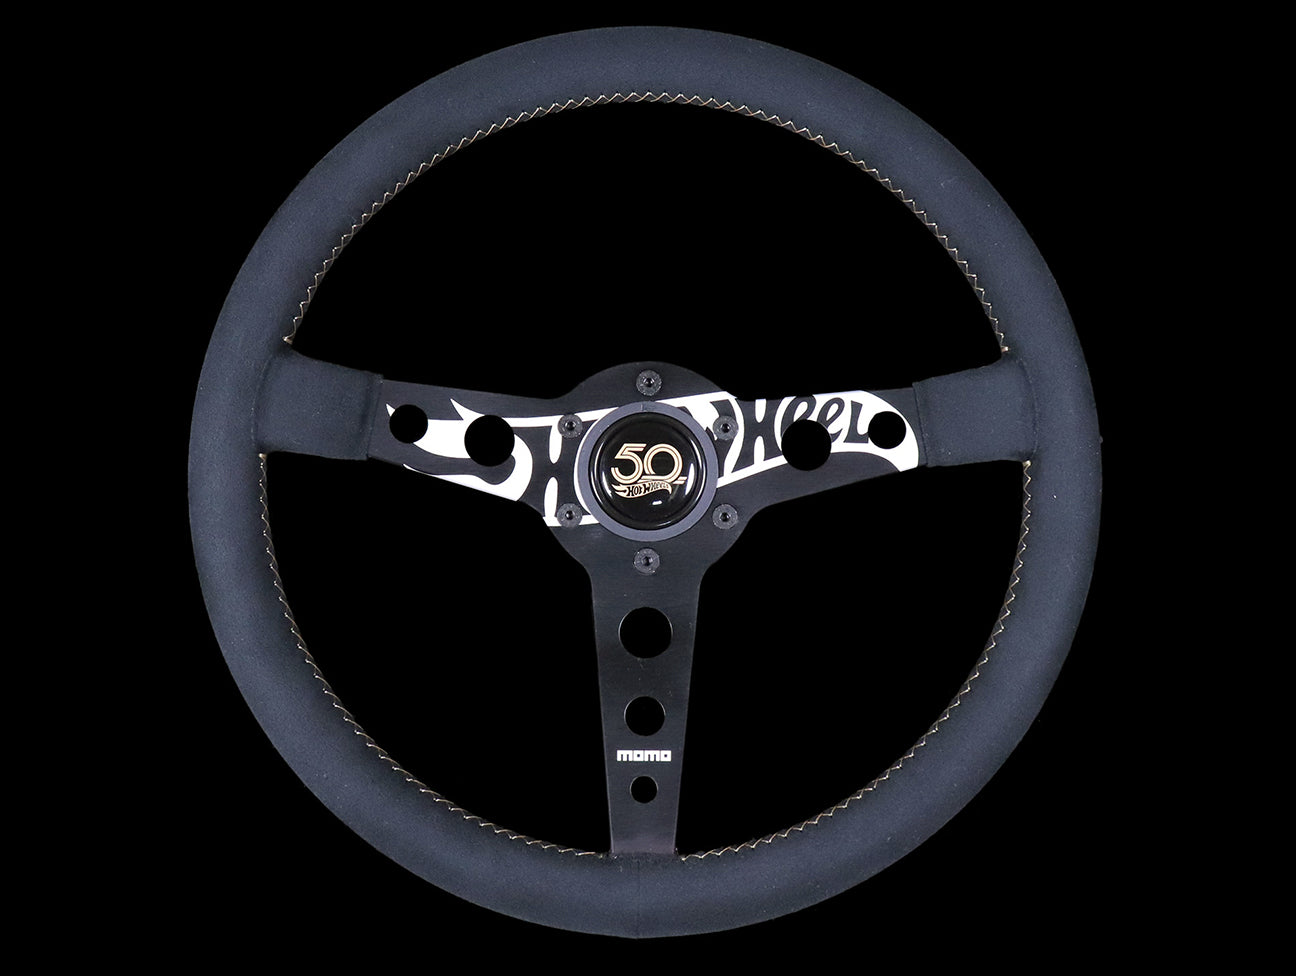 Momo X Hot Wheels Limted Edition Steering Wheel - 350mm Black Alcantara Suede w/ Gold Stitching